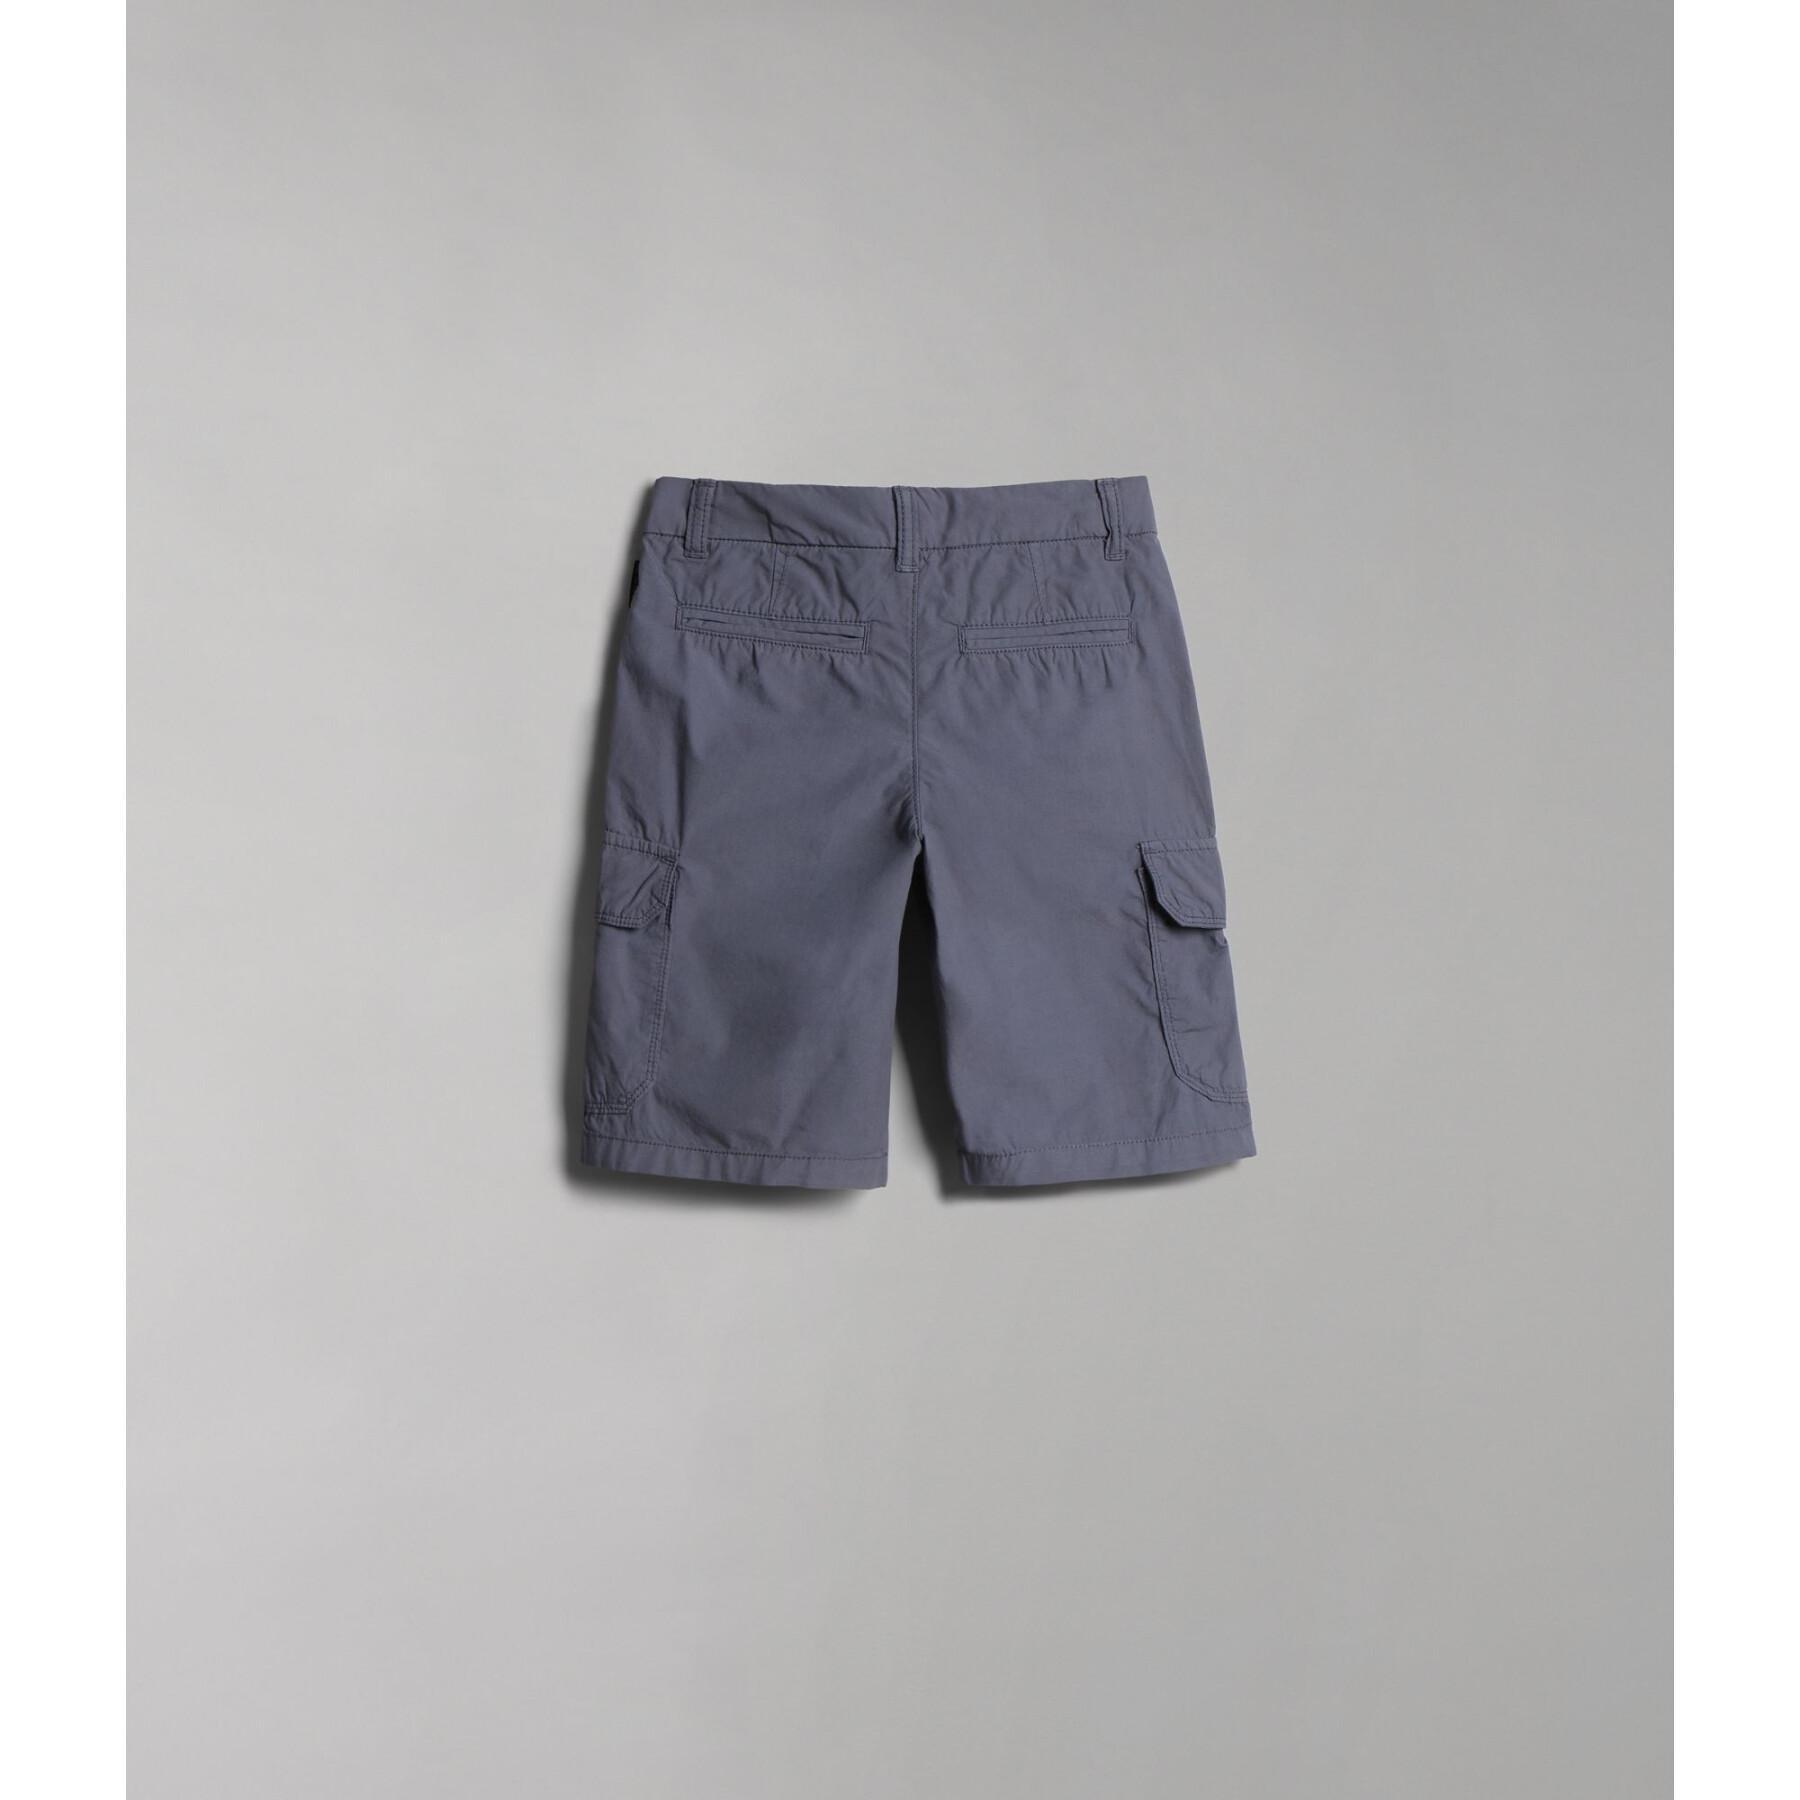 Pantalón corto para niños Napapijri Noto